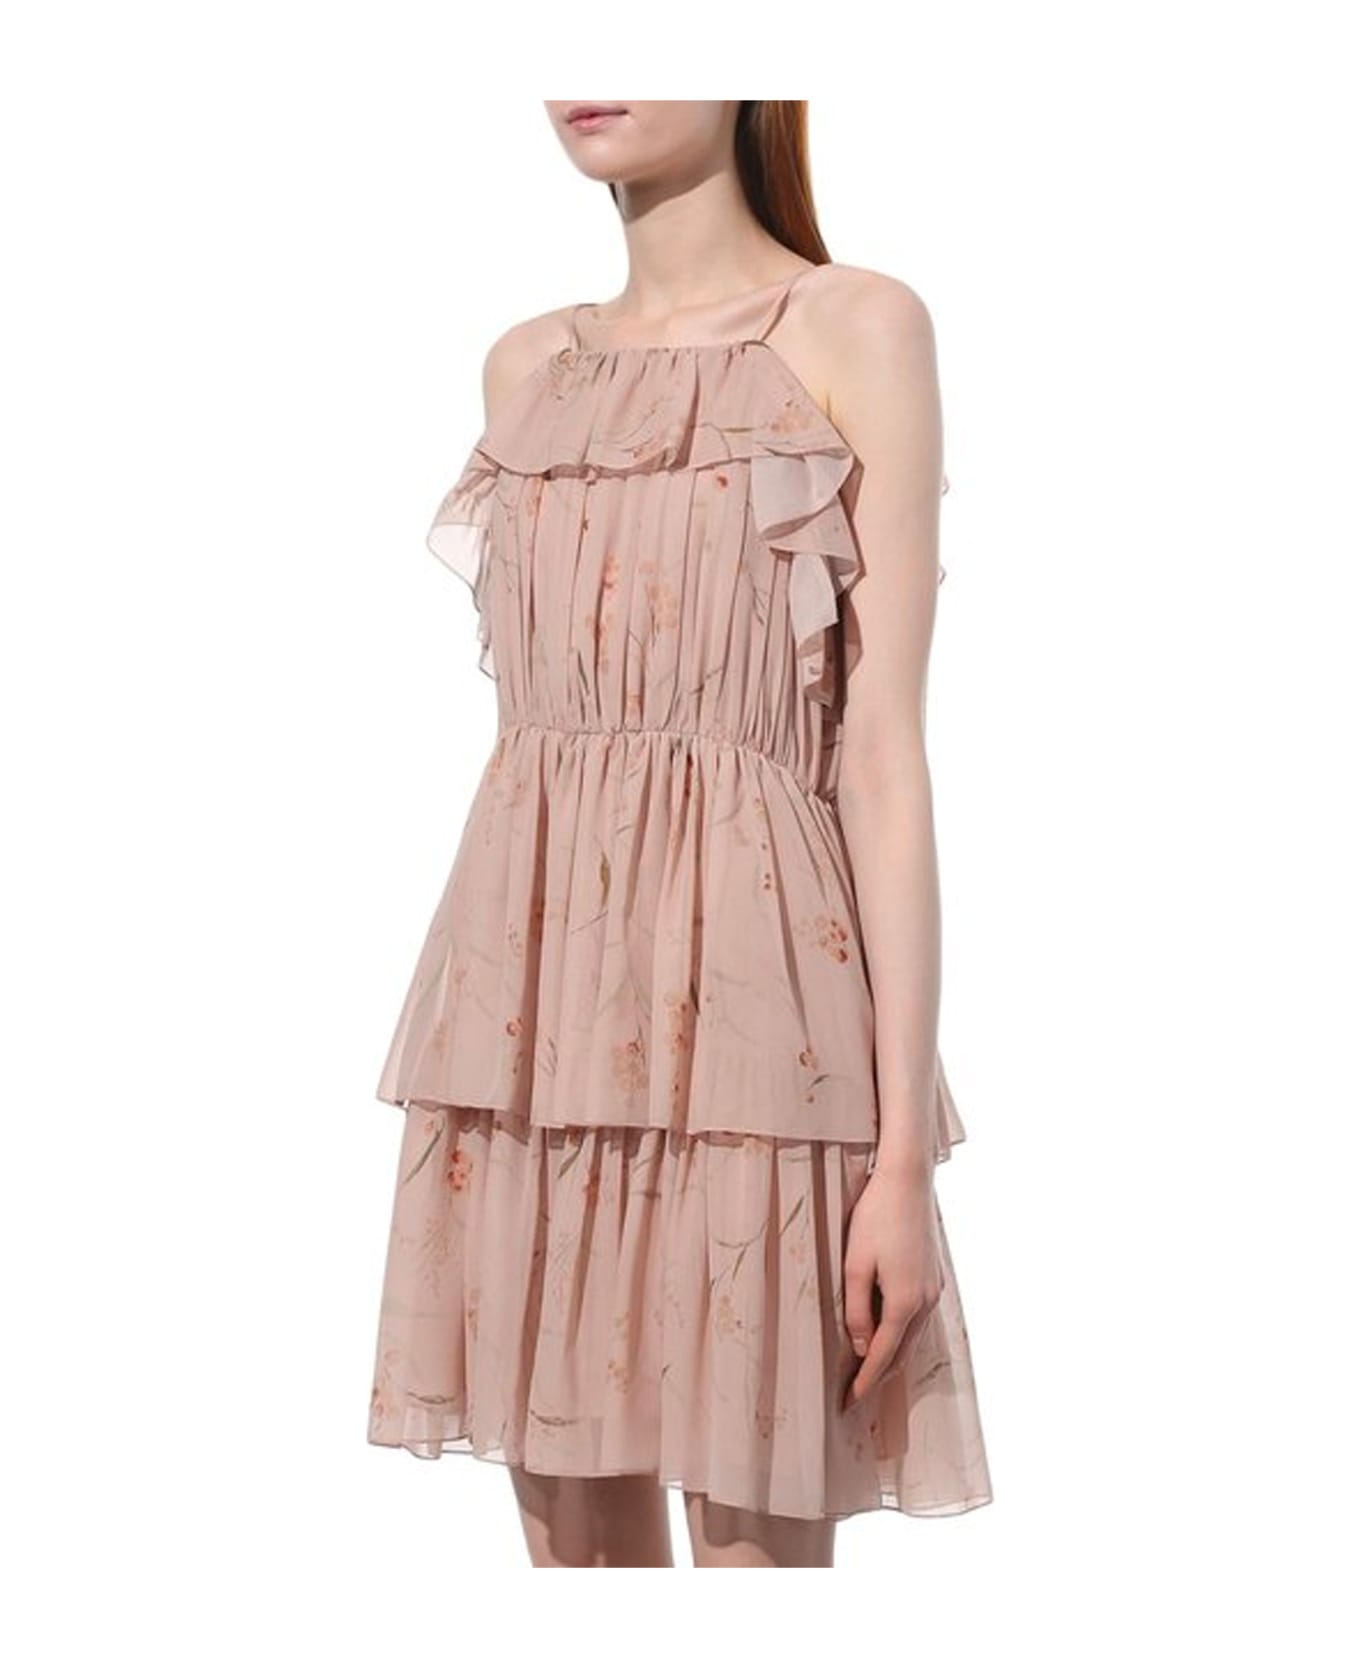 Celine Flower Print Chiffon Dress - Pink